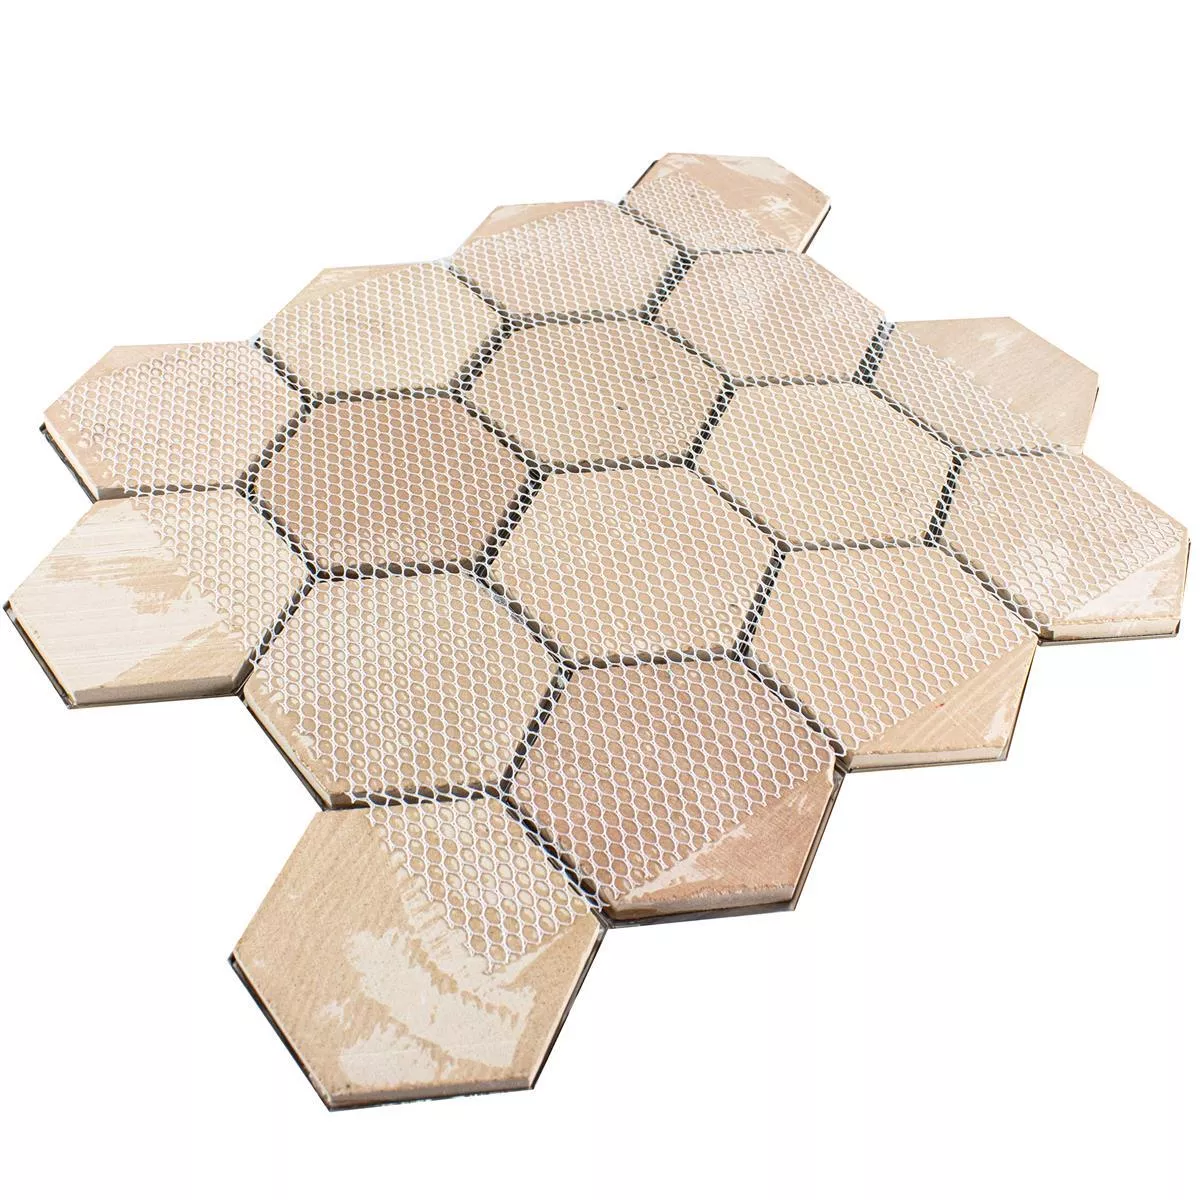 Stainless Steel Mosaic Tiles Durango Hexagon 3D Brown